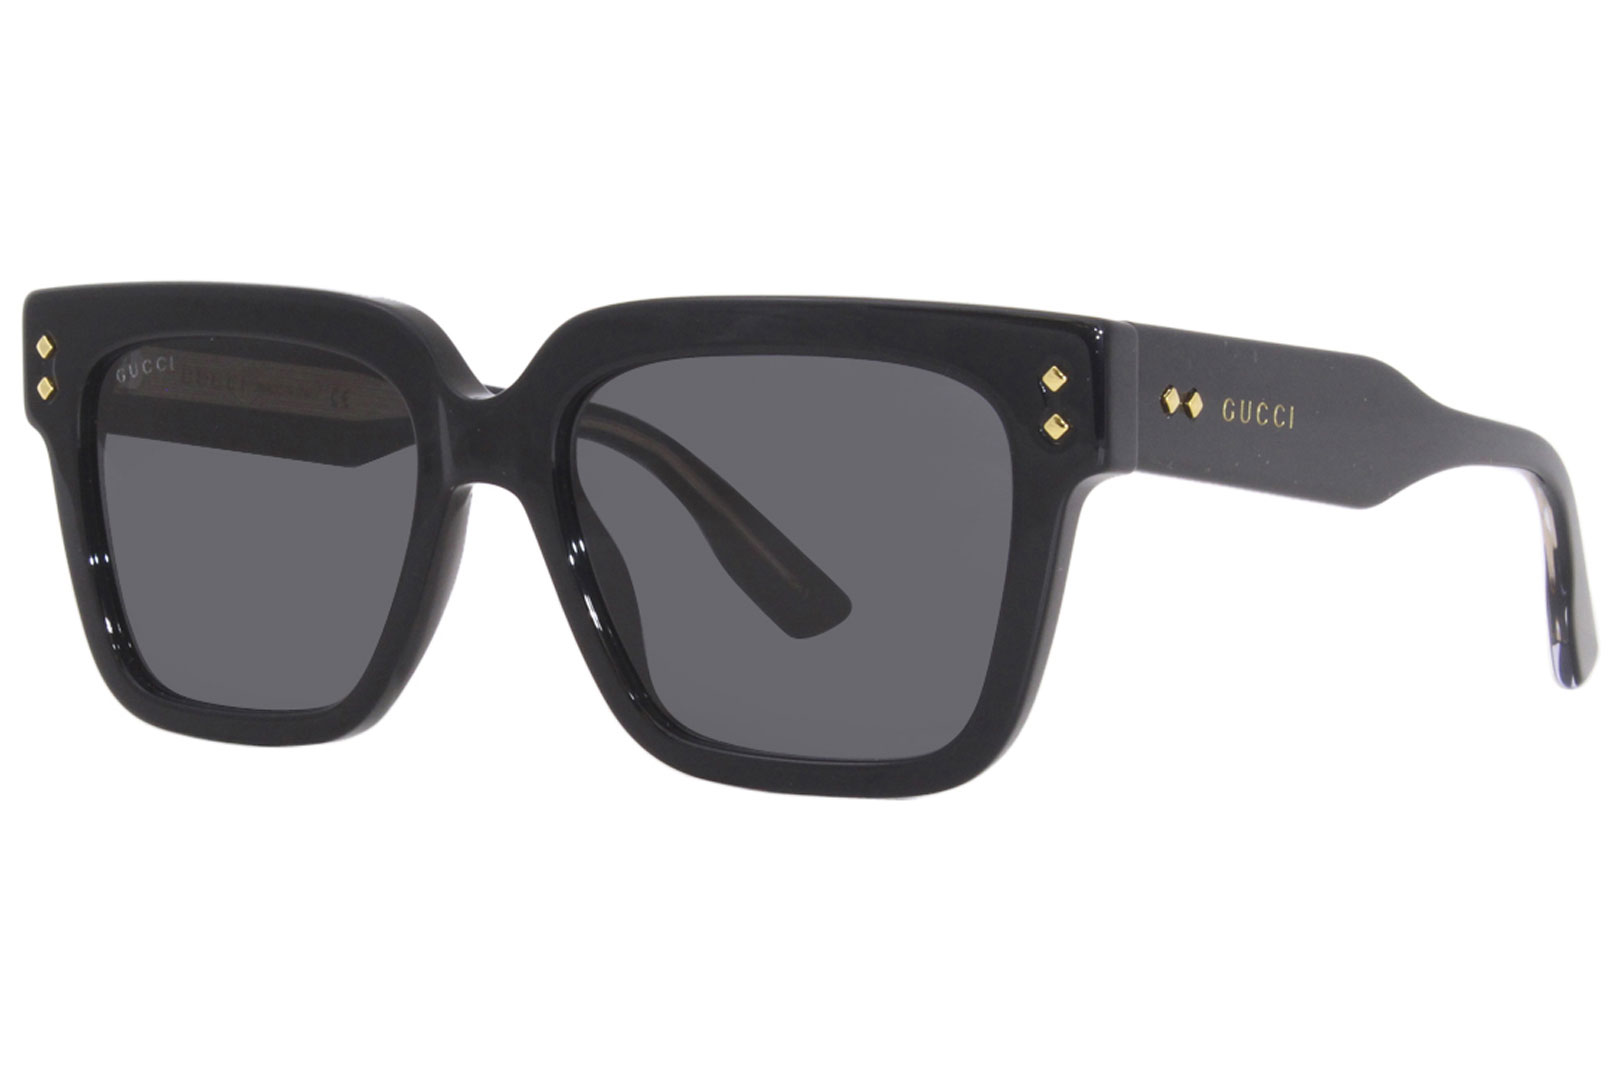  Gucci Rectangular Sunglasses GG0008S 001 Shiny Black